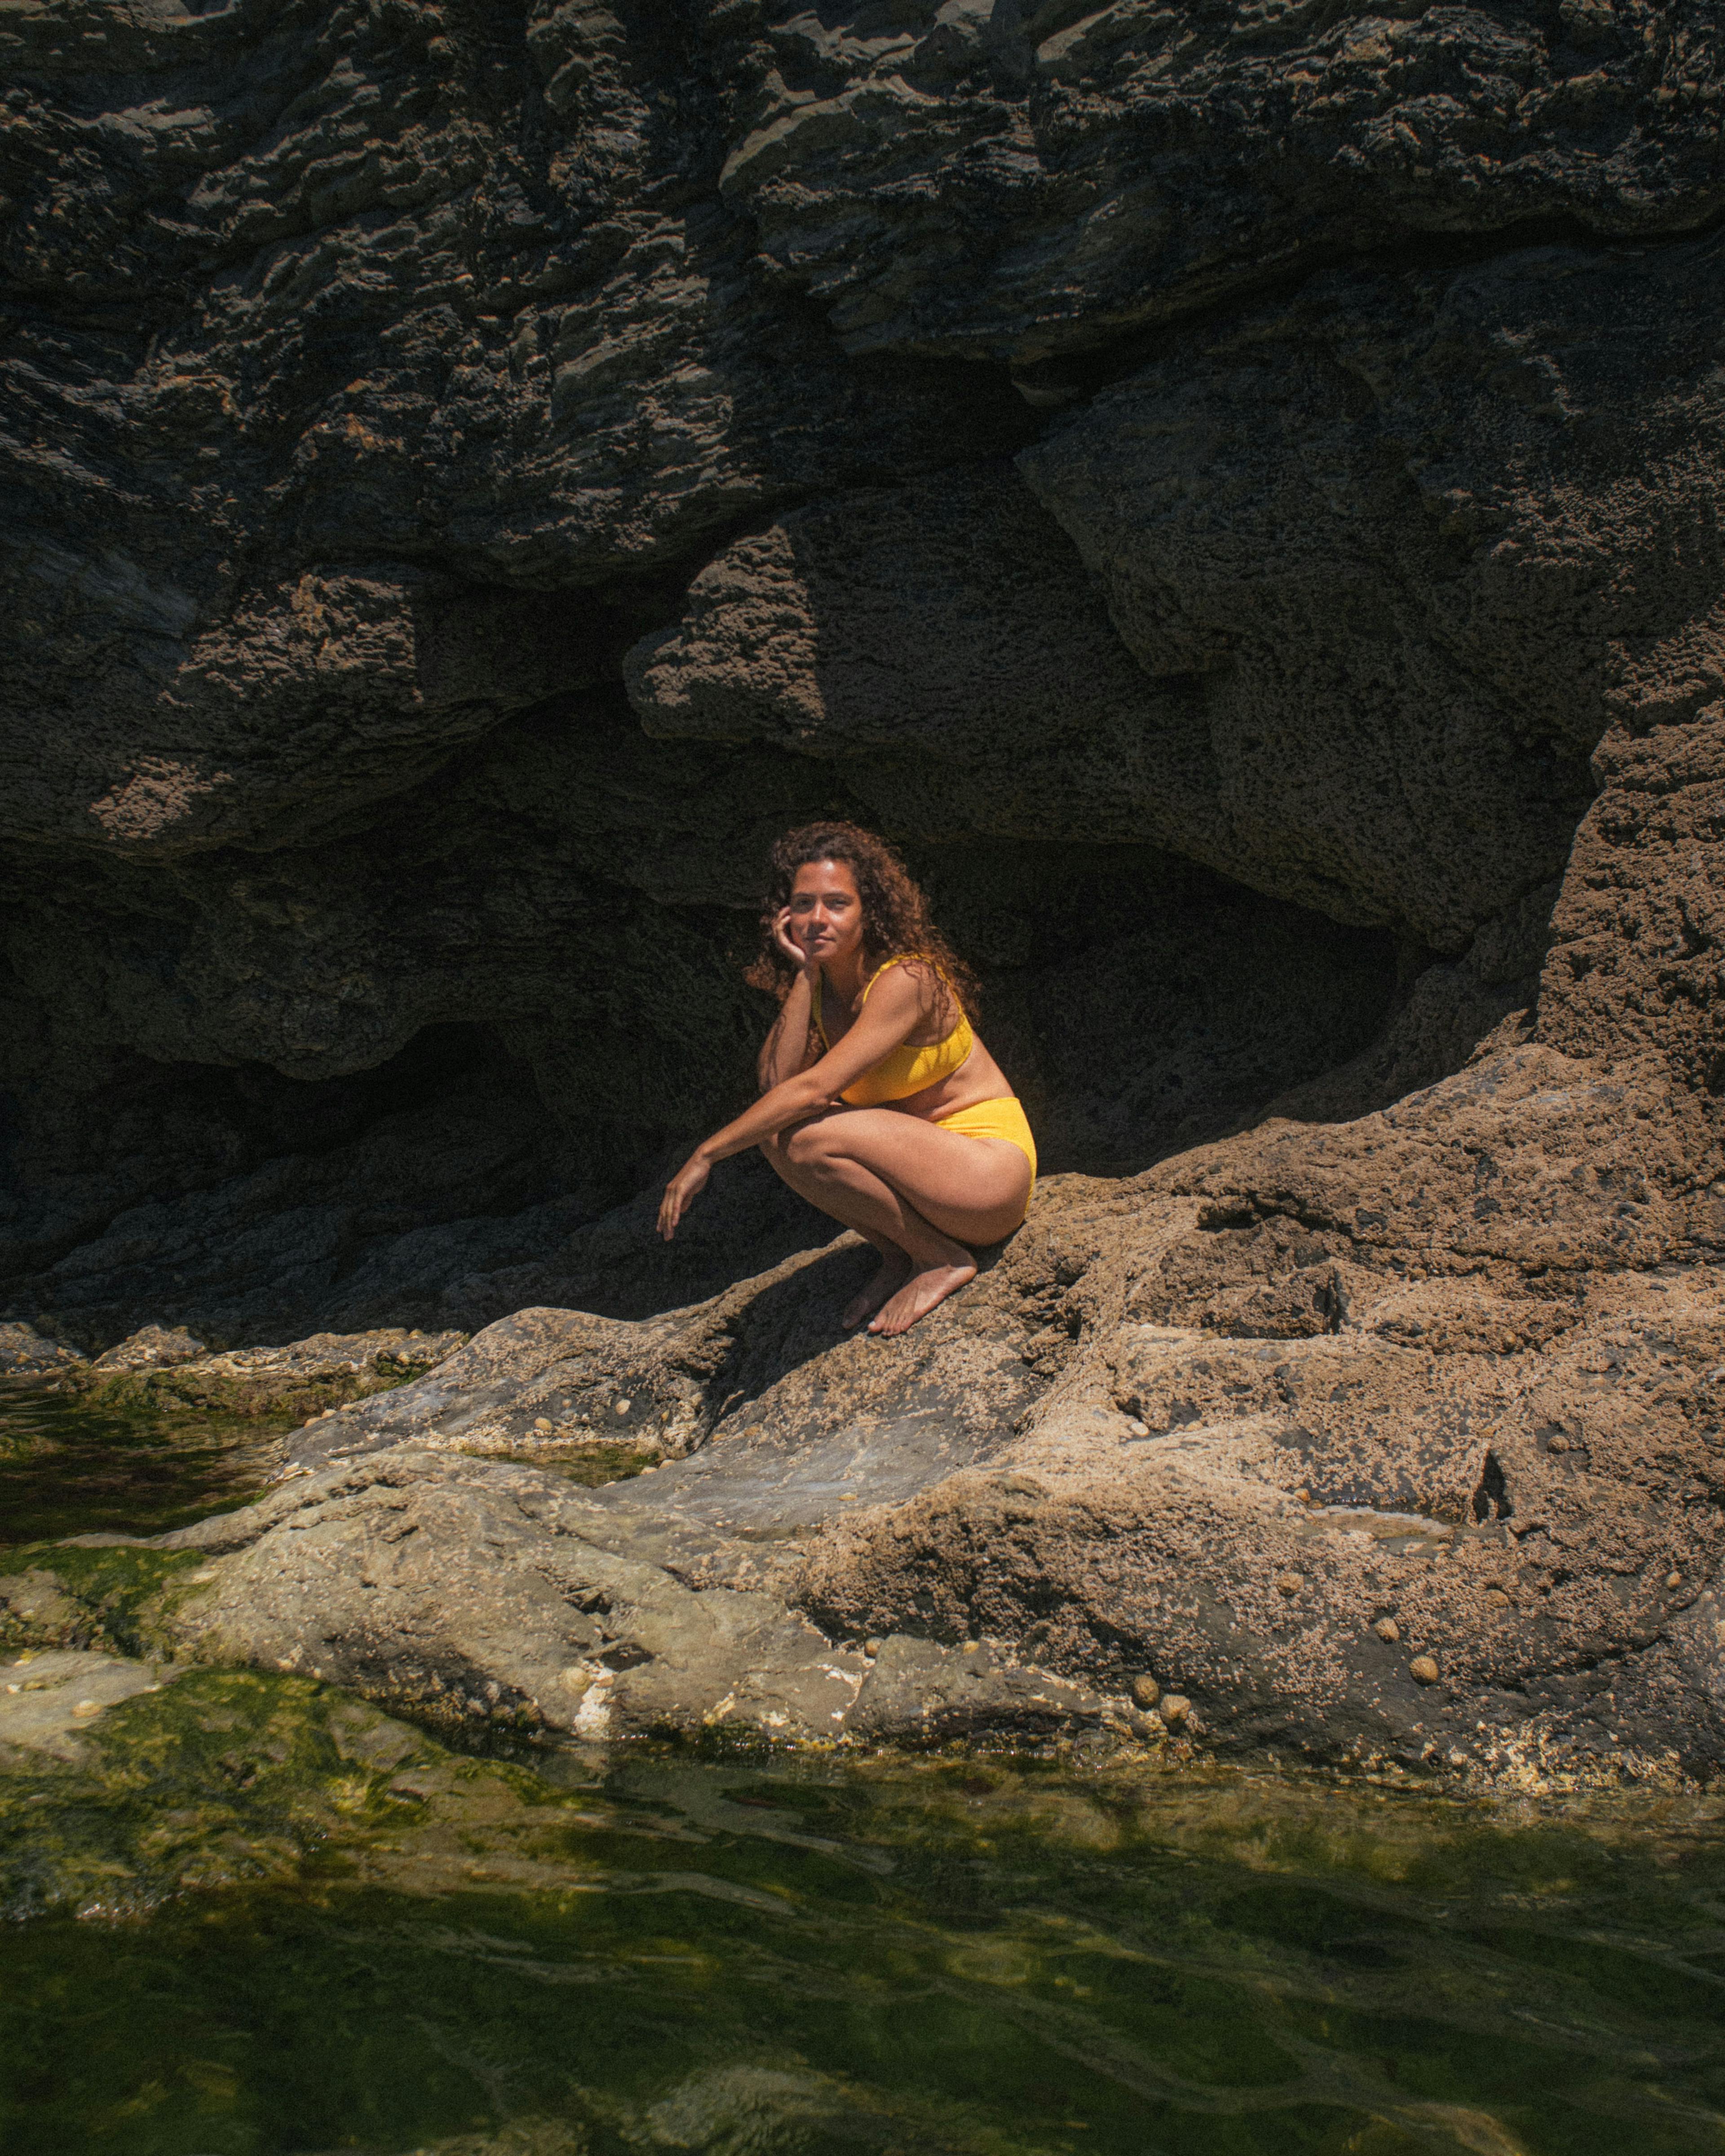 Lily sitting on rocks